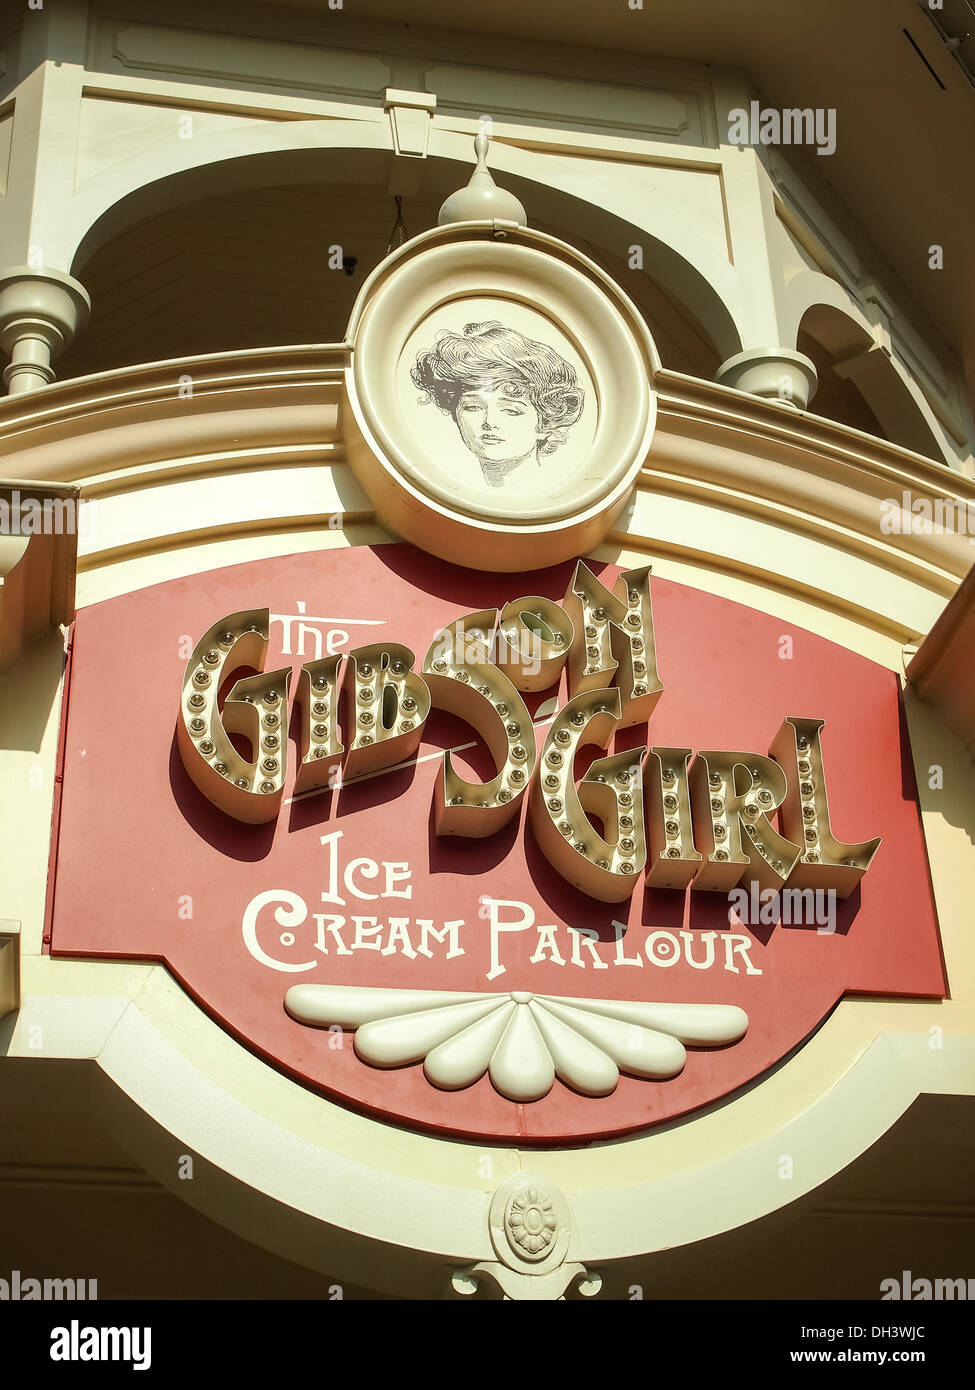 La Gibson Girl ice cream parlour signer chez Disneyland Paris, France Banque D'Images